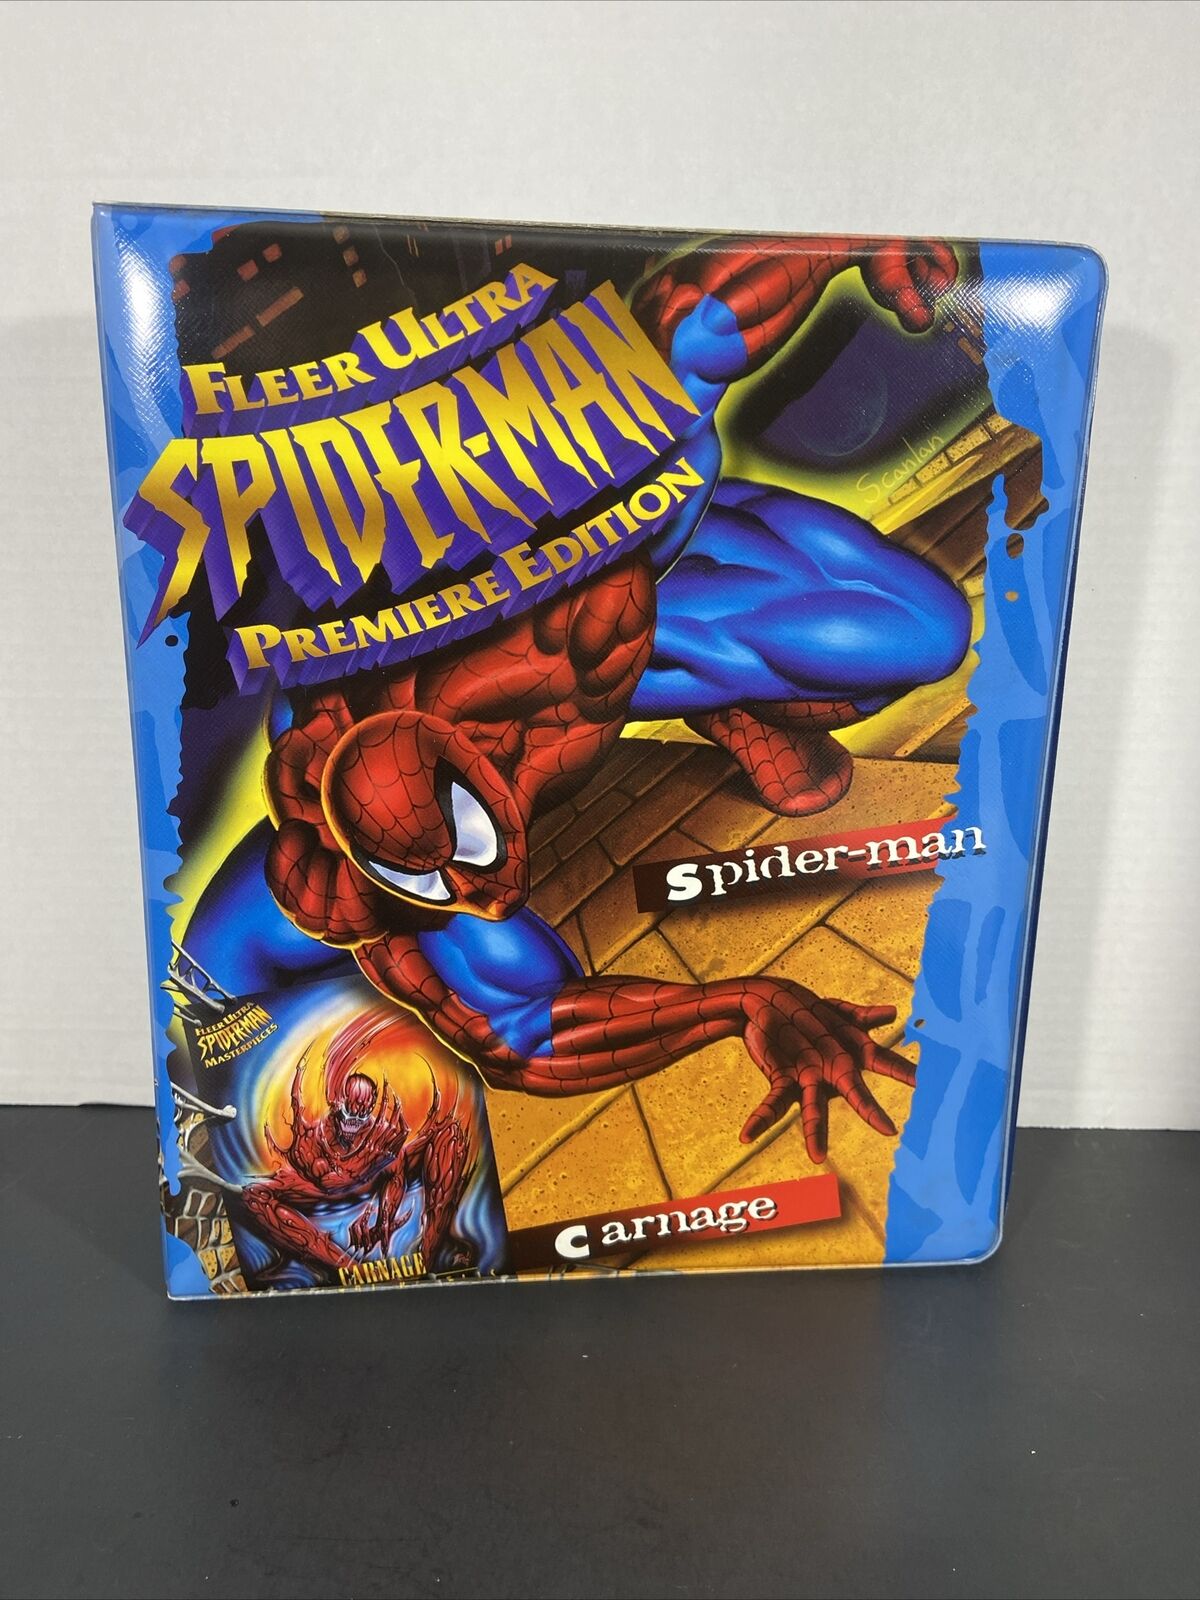 1995 Fleer Ultra Spiderman Premiere Edition 3 Ring Binder ONLY NO CARDS Marvel